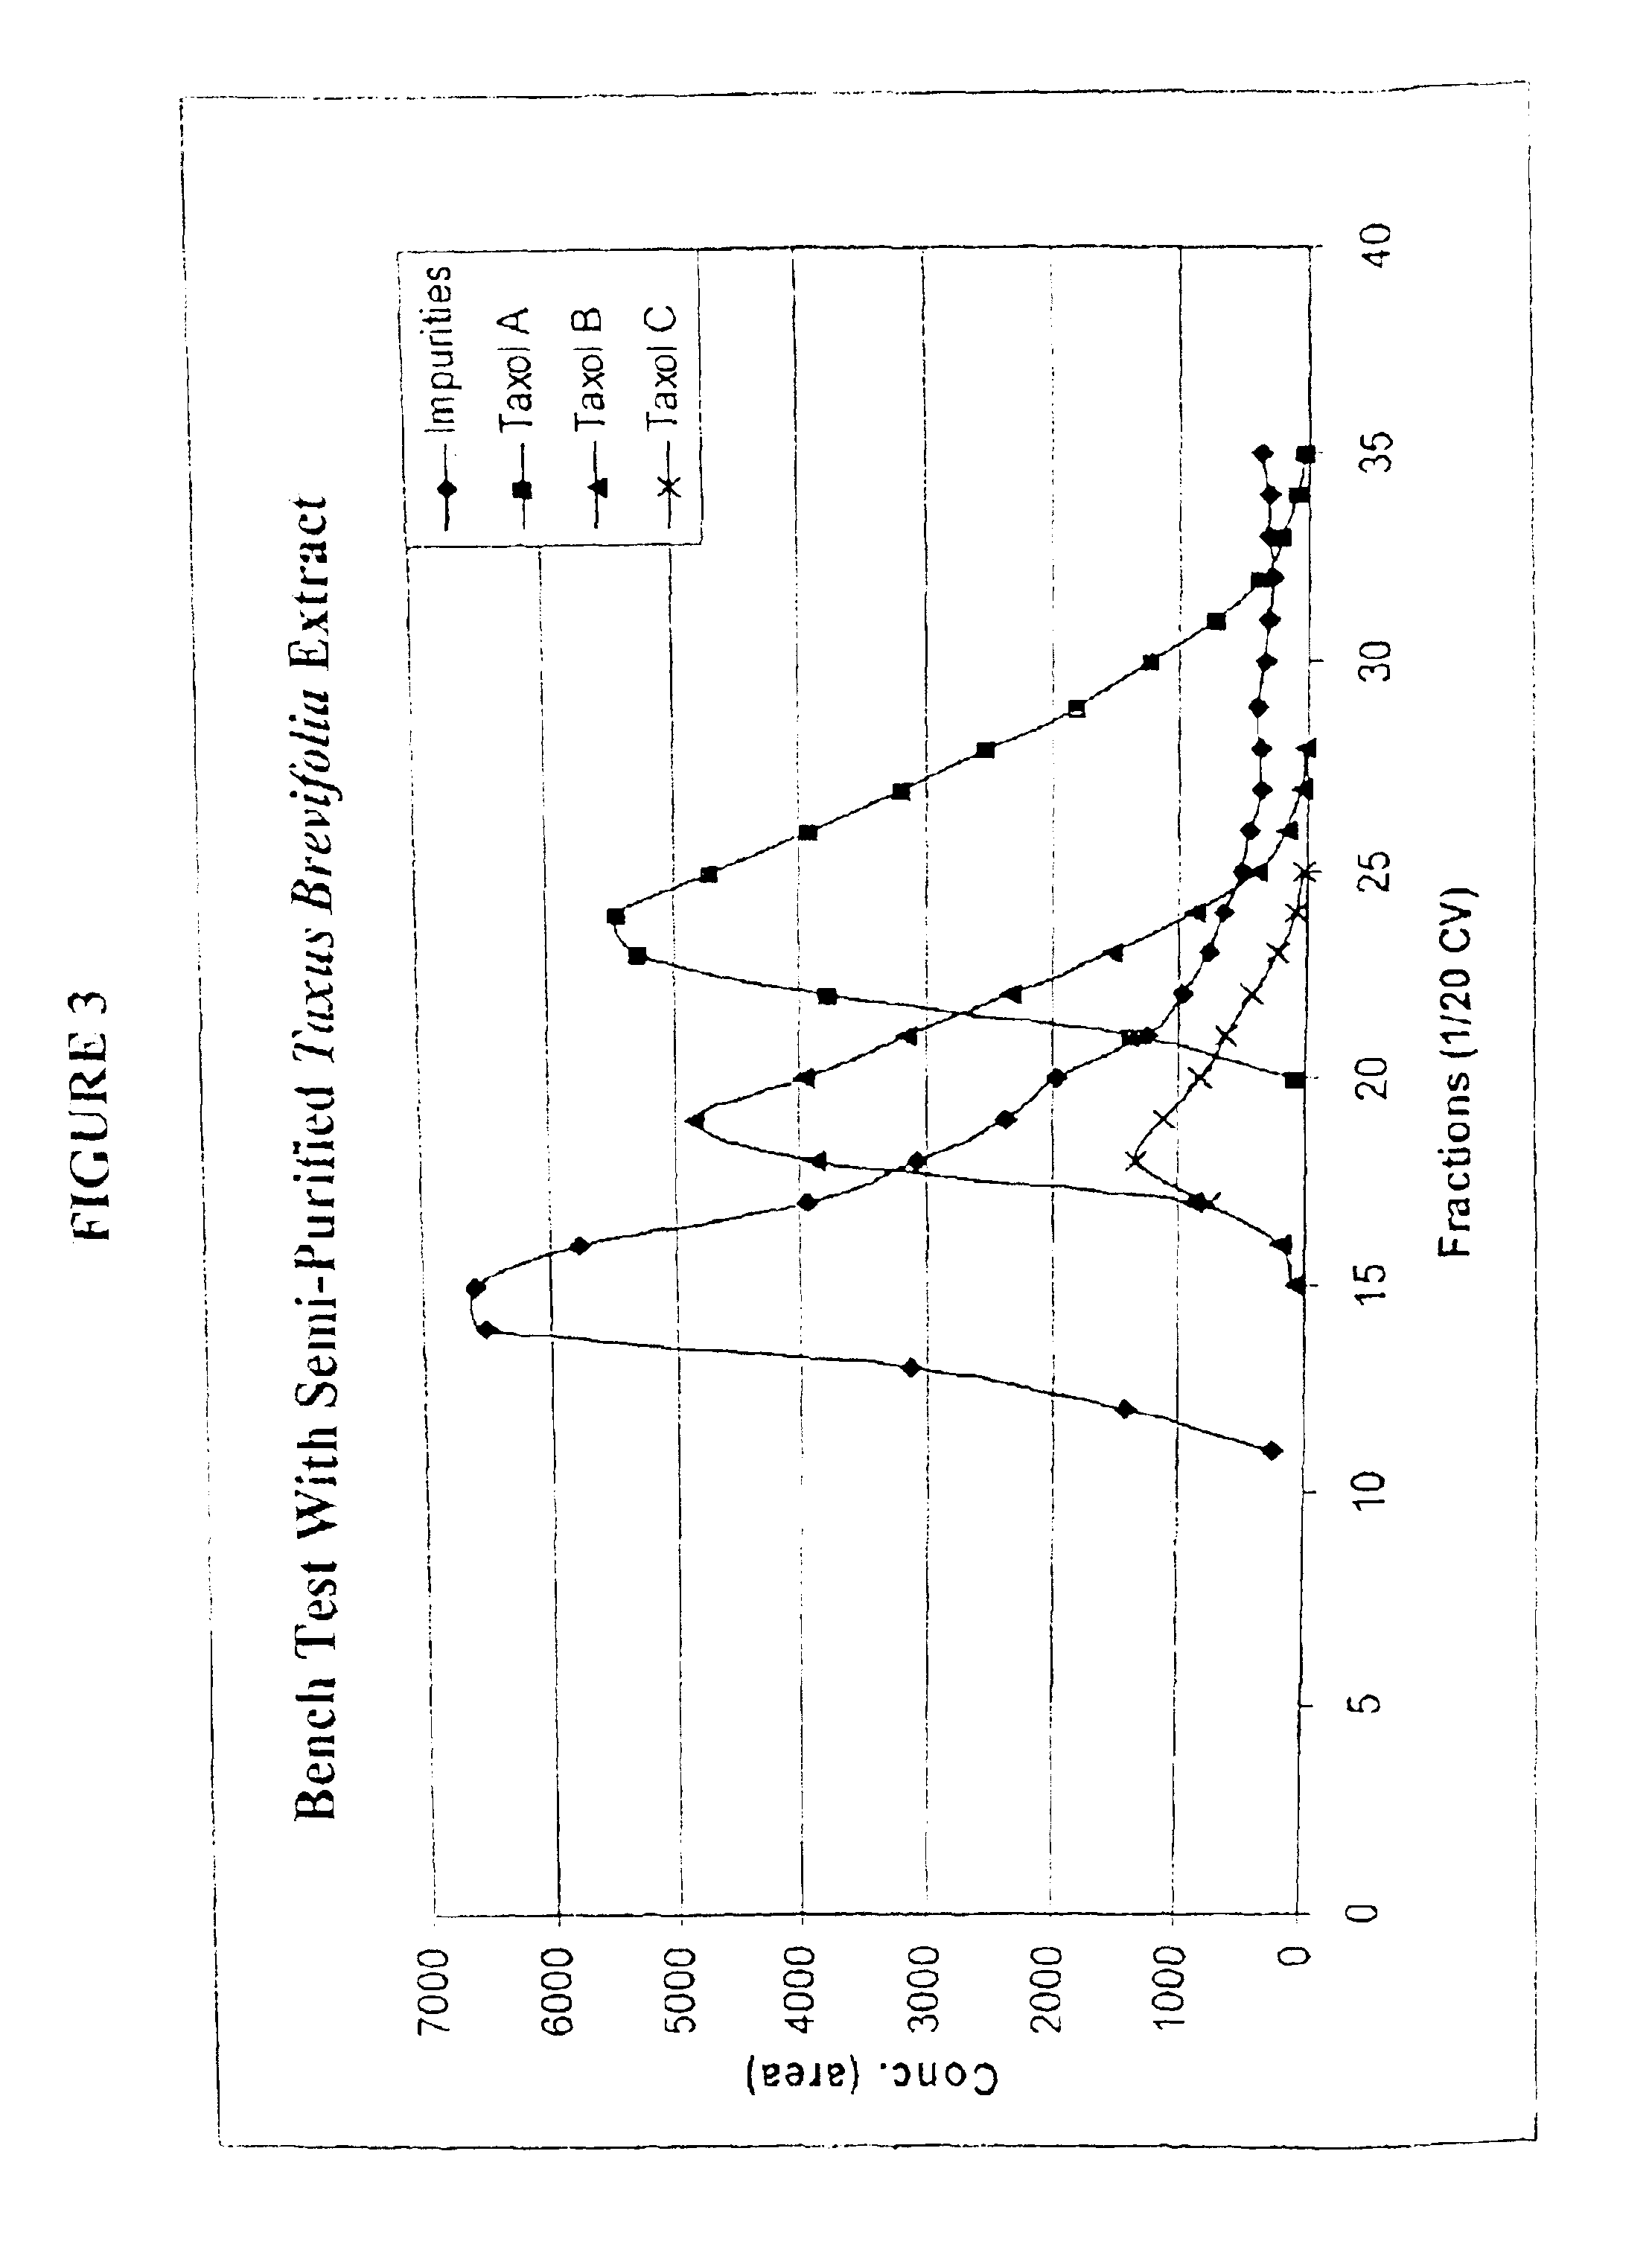 Purification of taxanes and taxane mixtures using polyethyleneimine-bonded resins